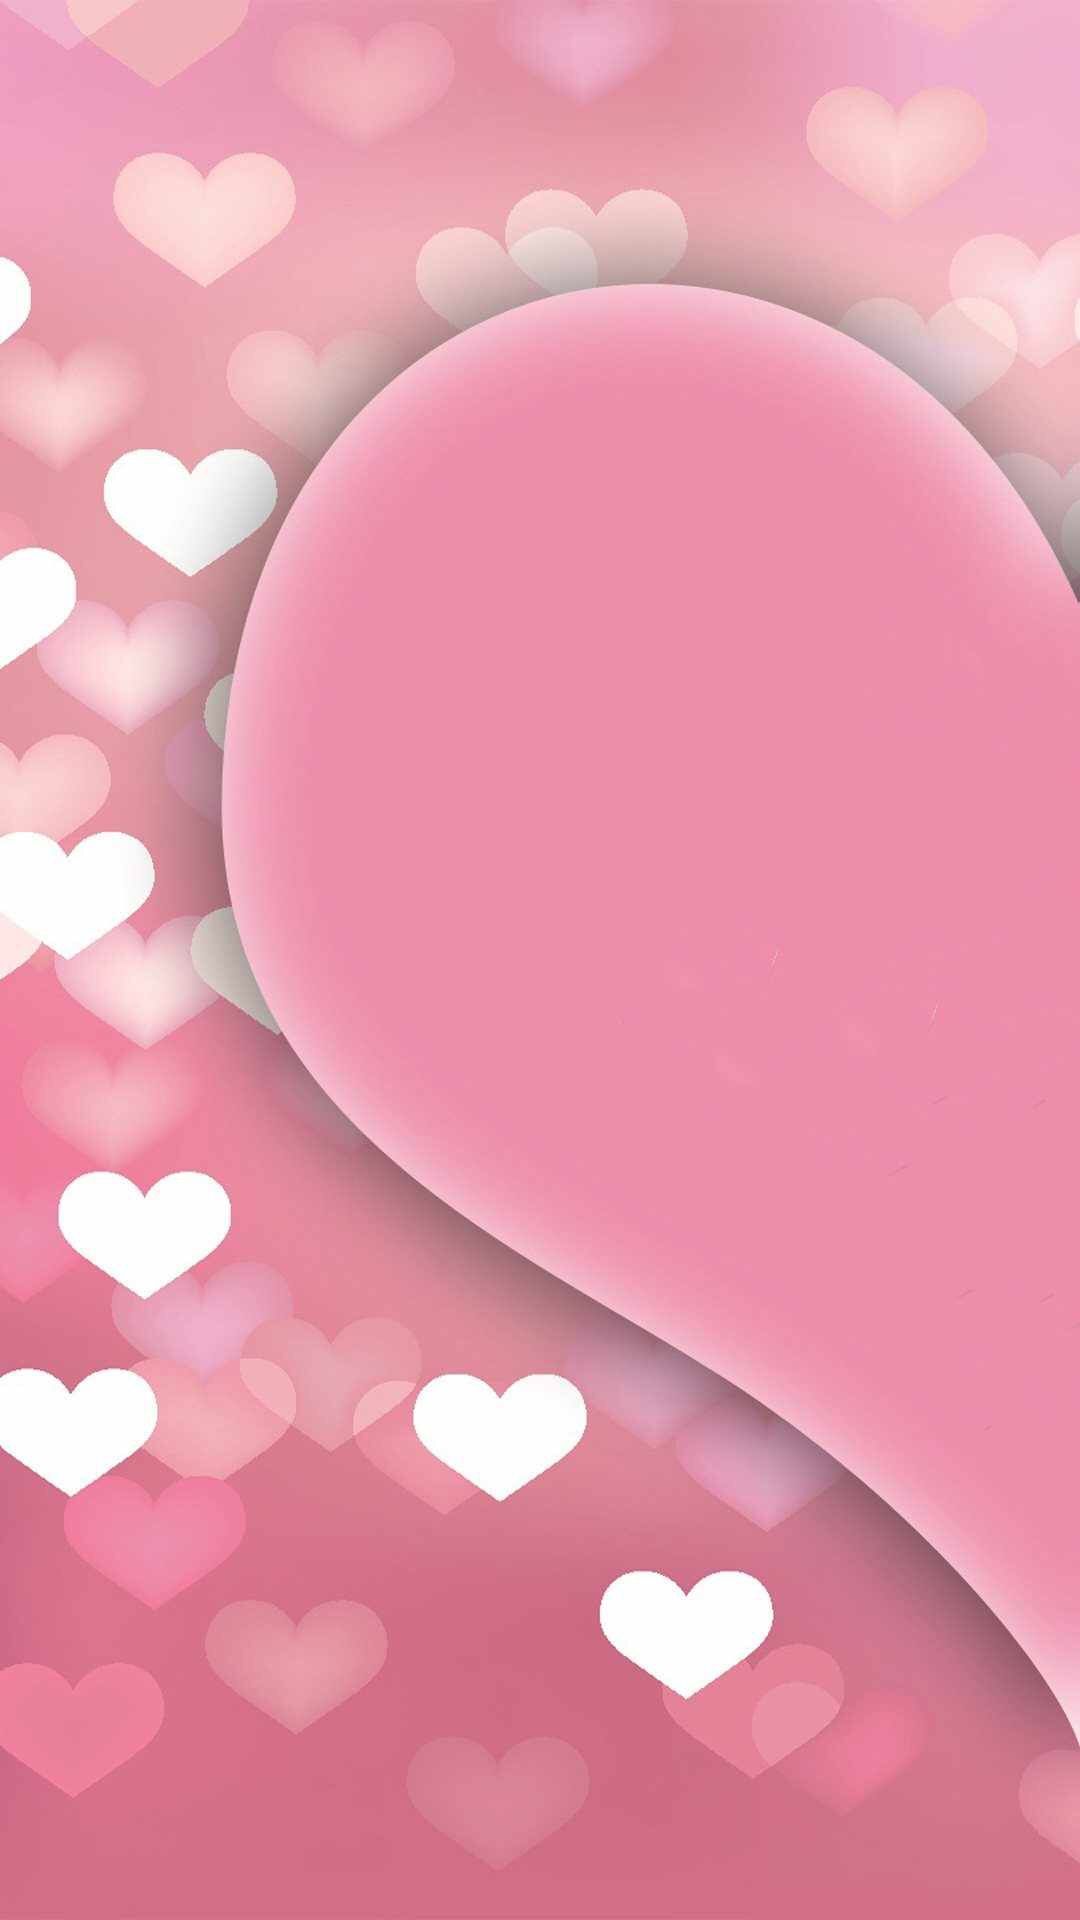 Half Heart Wallpaper Free Half Heart Background